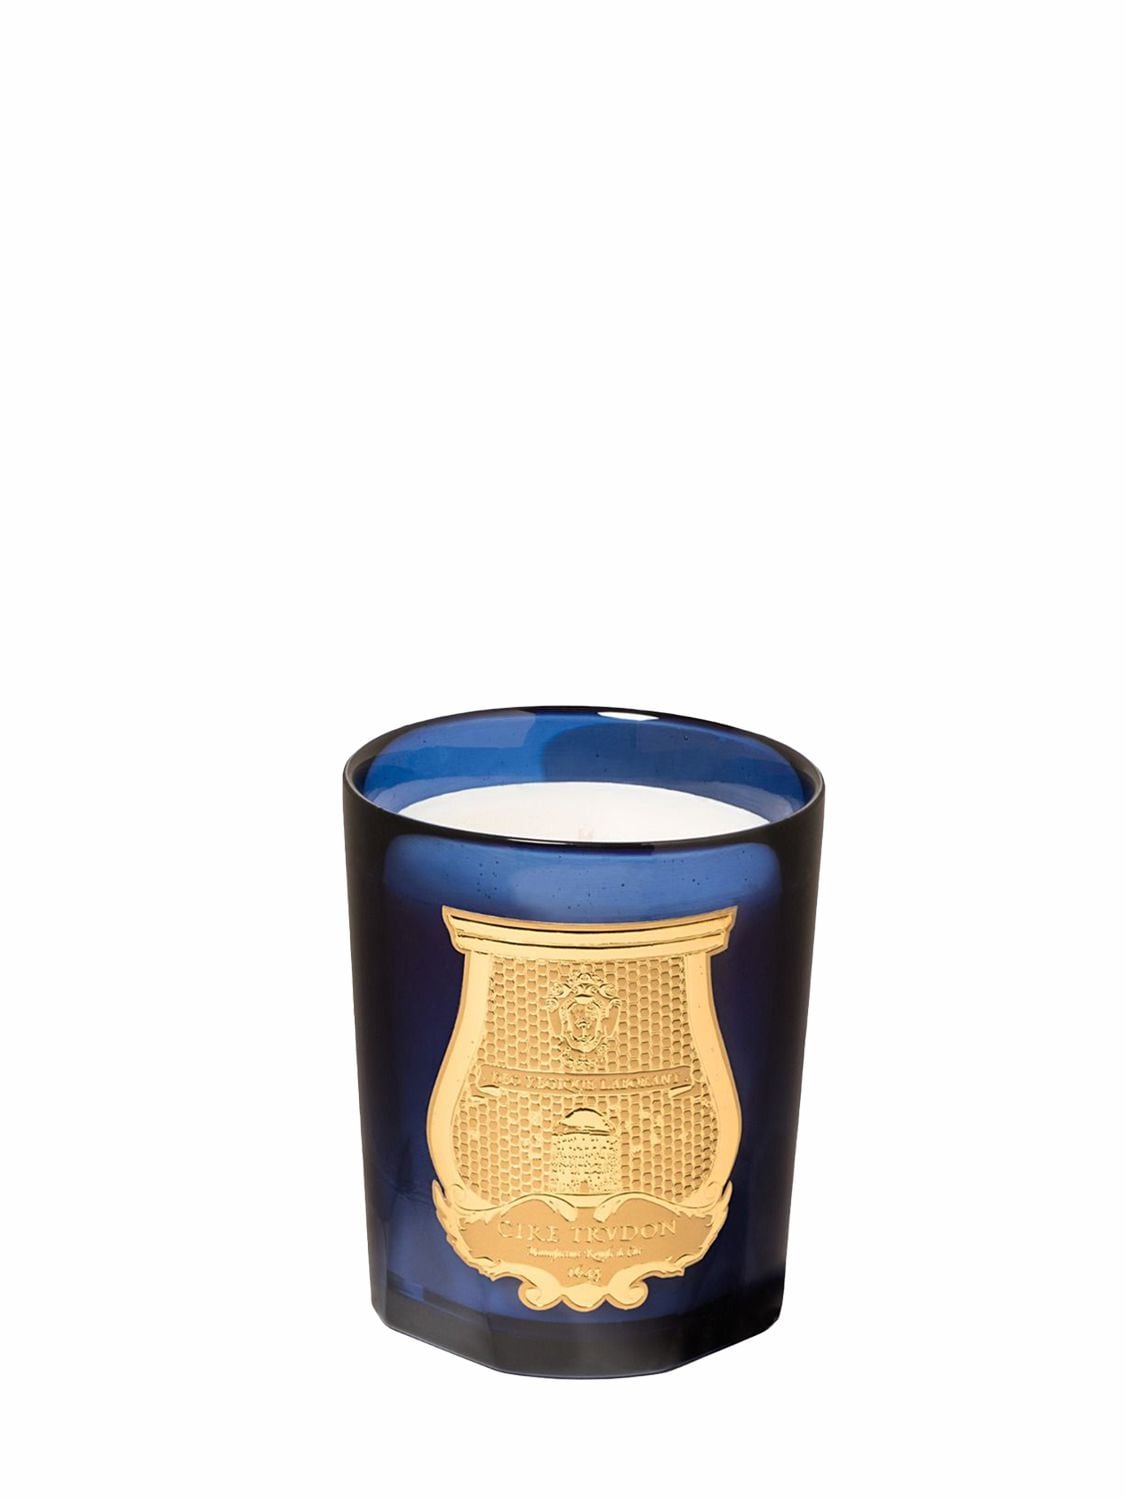 Trudon 270克madurai Candle香氛蜡烛 In Blue